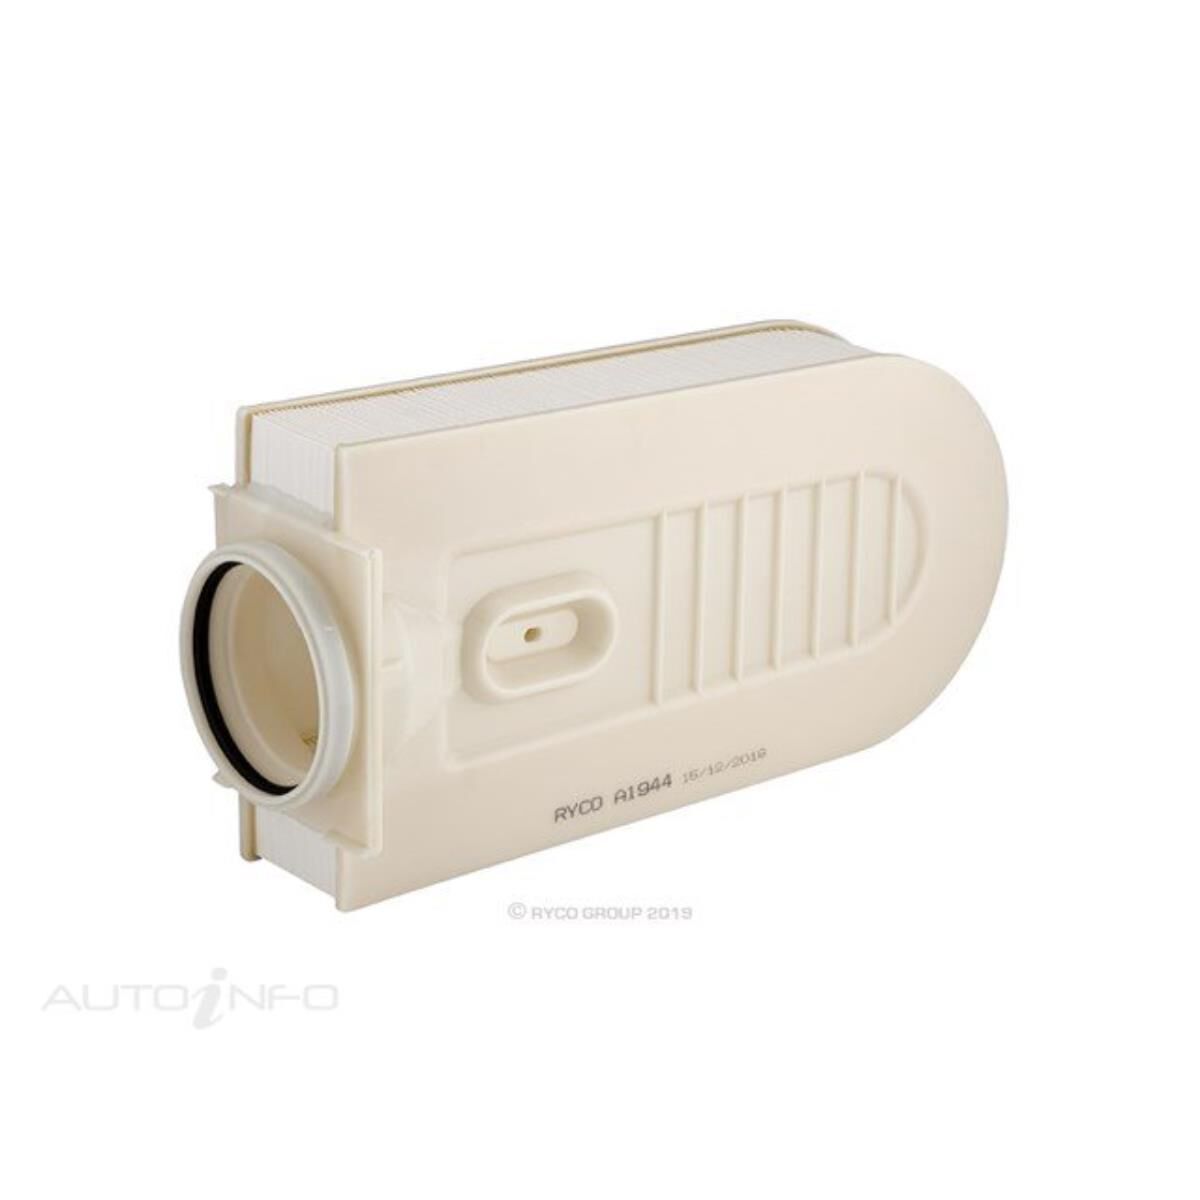 Ryco Air Filter - A1944